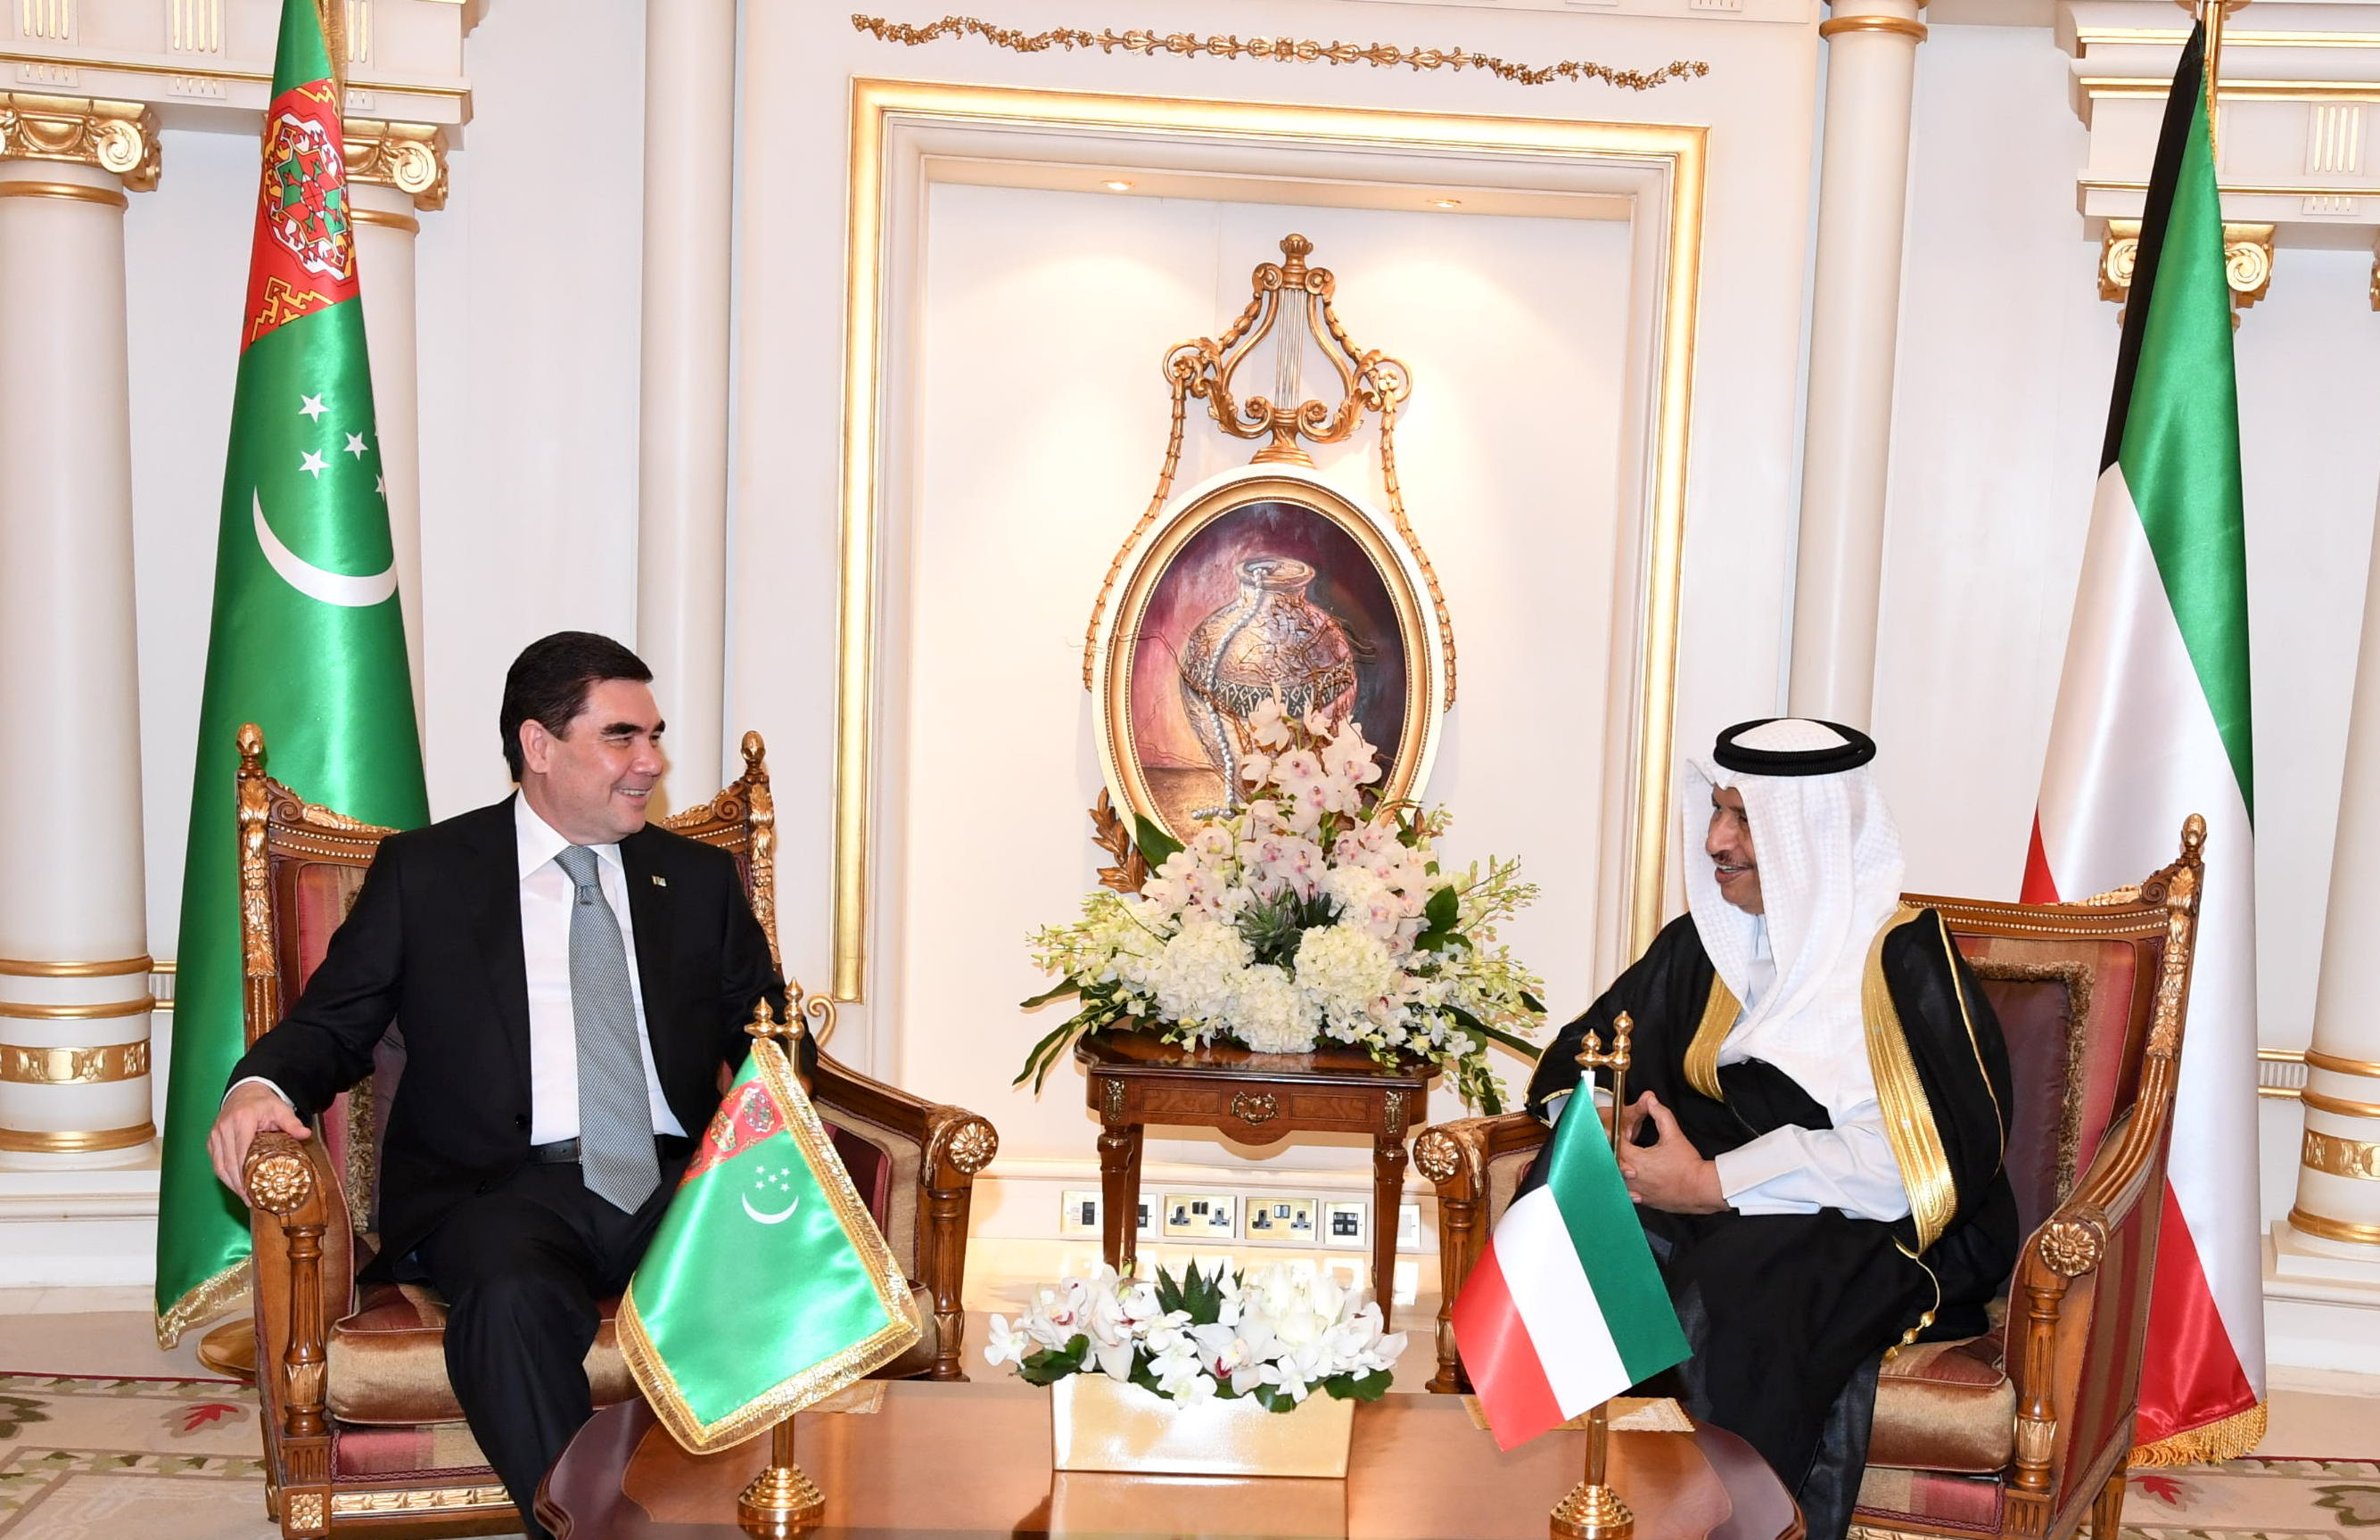 Tukrmen president Gurbanguly Berdimuhamedow meets His Highness the Prime Minister Sheikh Jaber Al-Mubarak Al-Hamad Al-Sabah